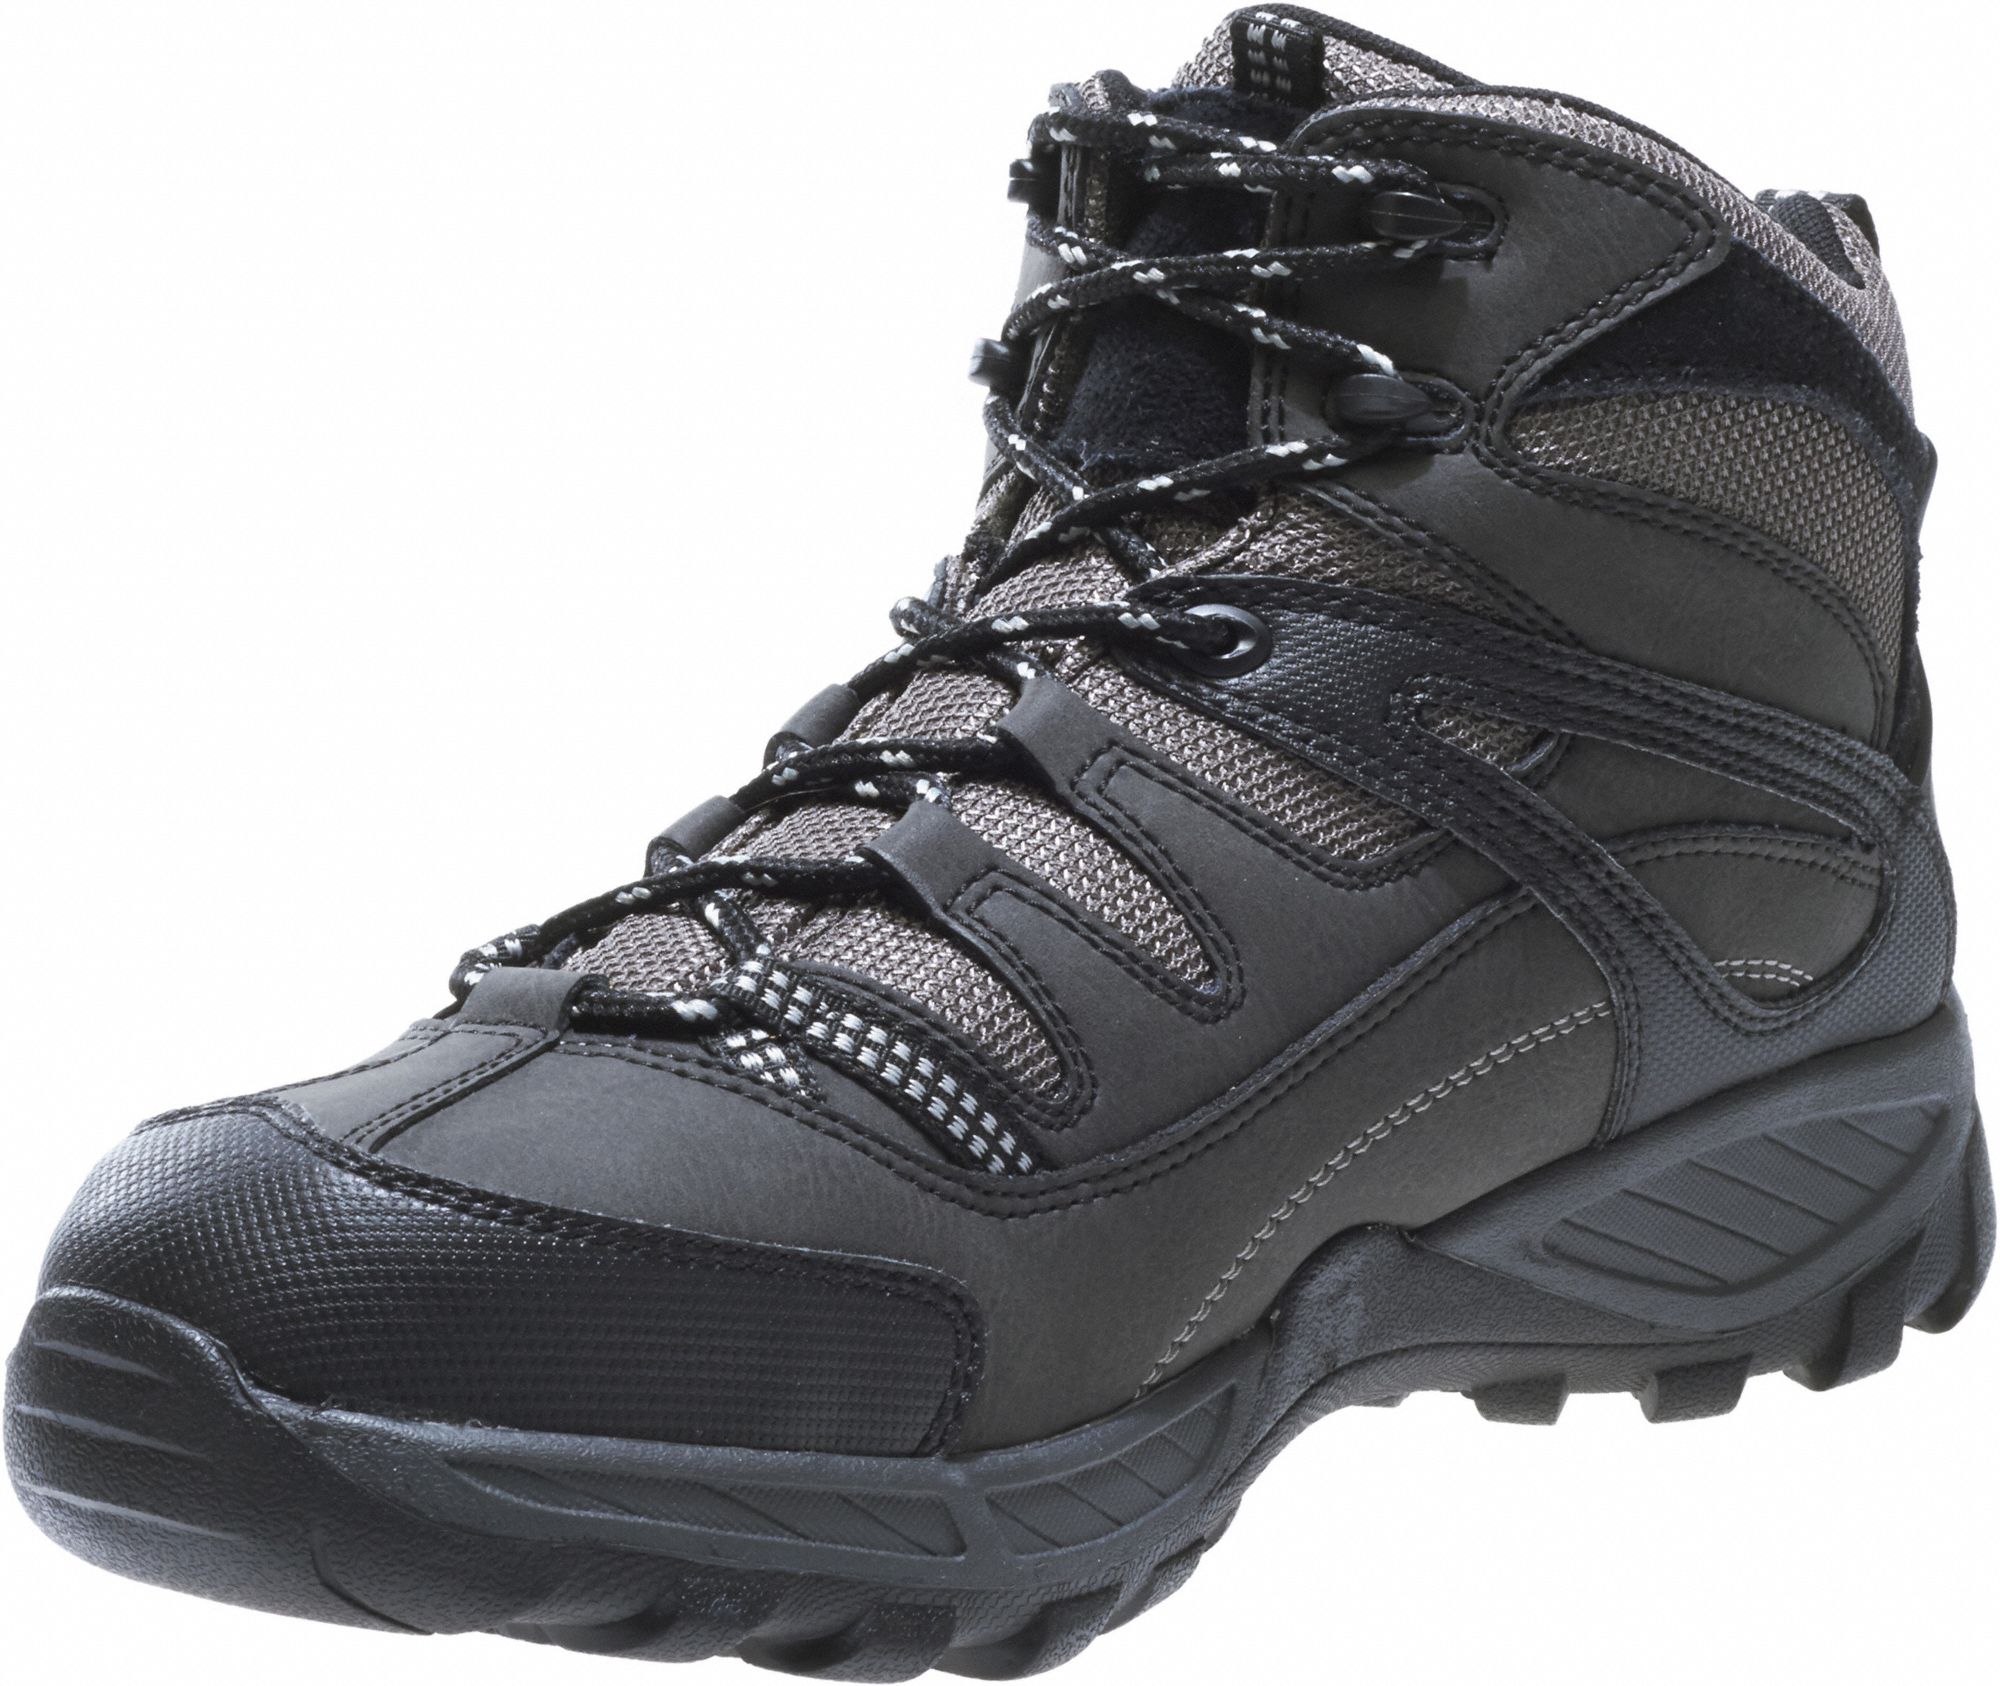 WOLVERINE Hiker Boot, 12, EW, Men's, Black/Gray, Steel Toe Type, 1 PR ...